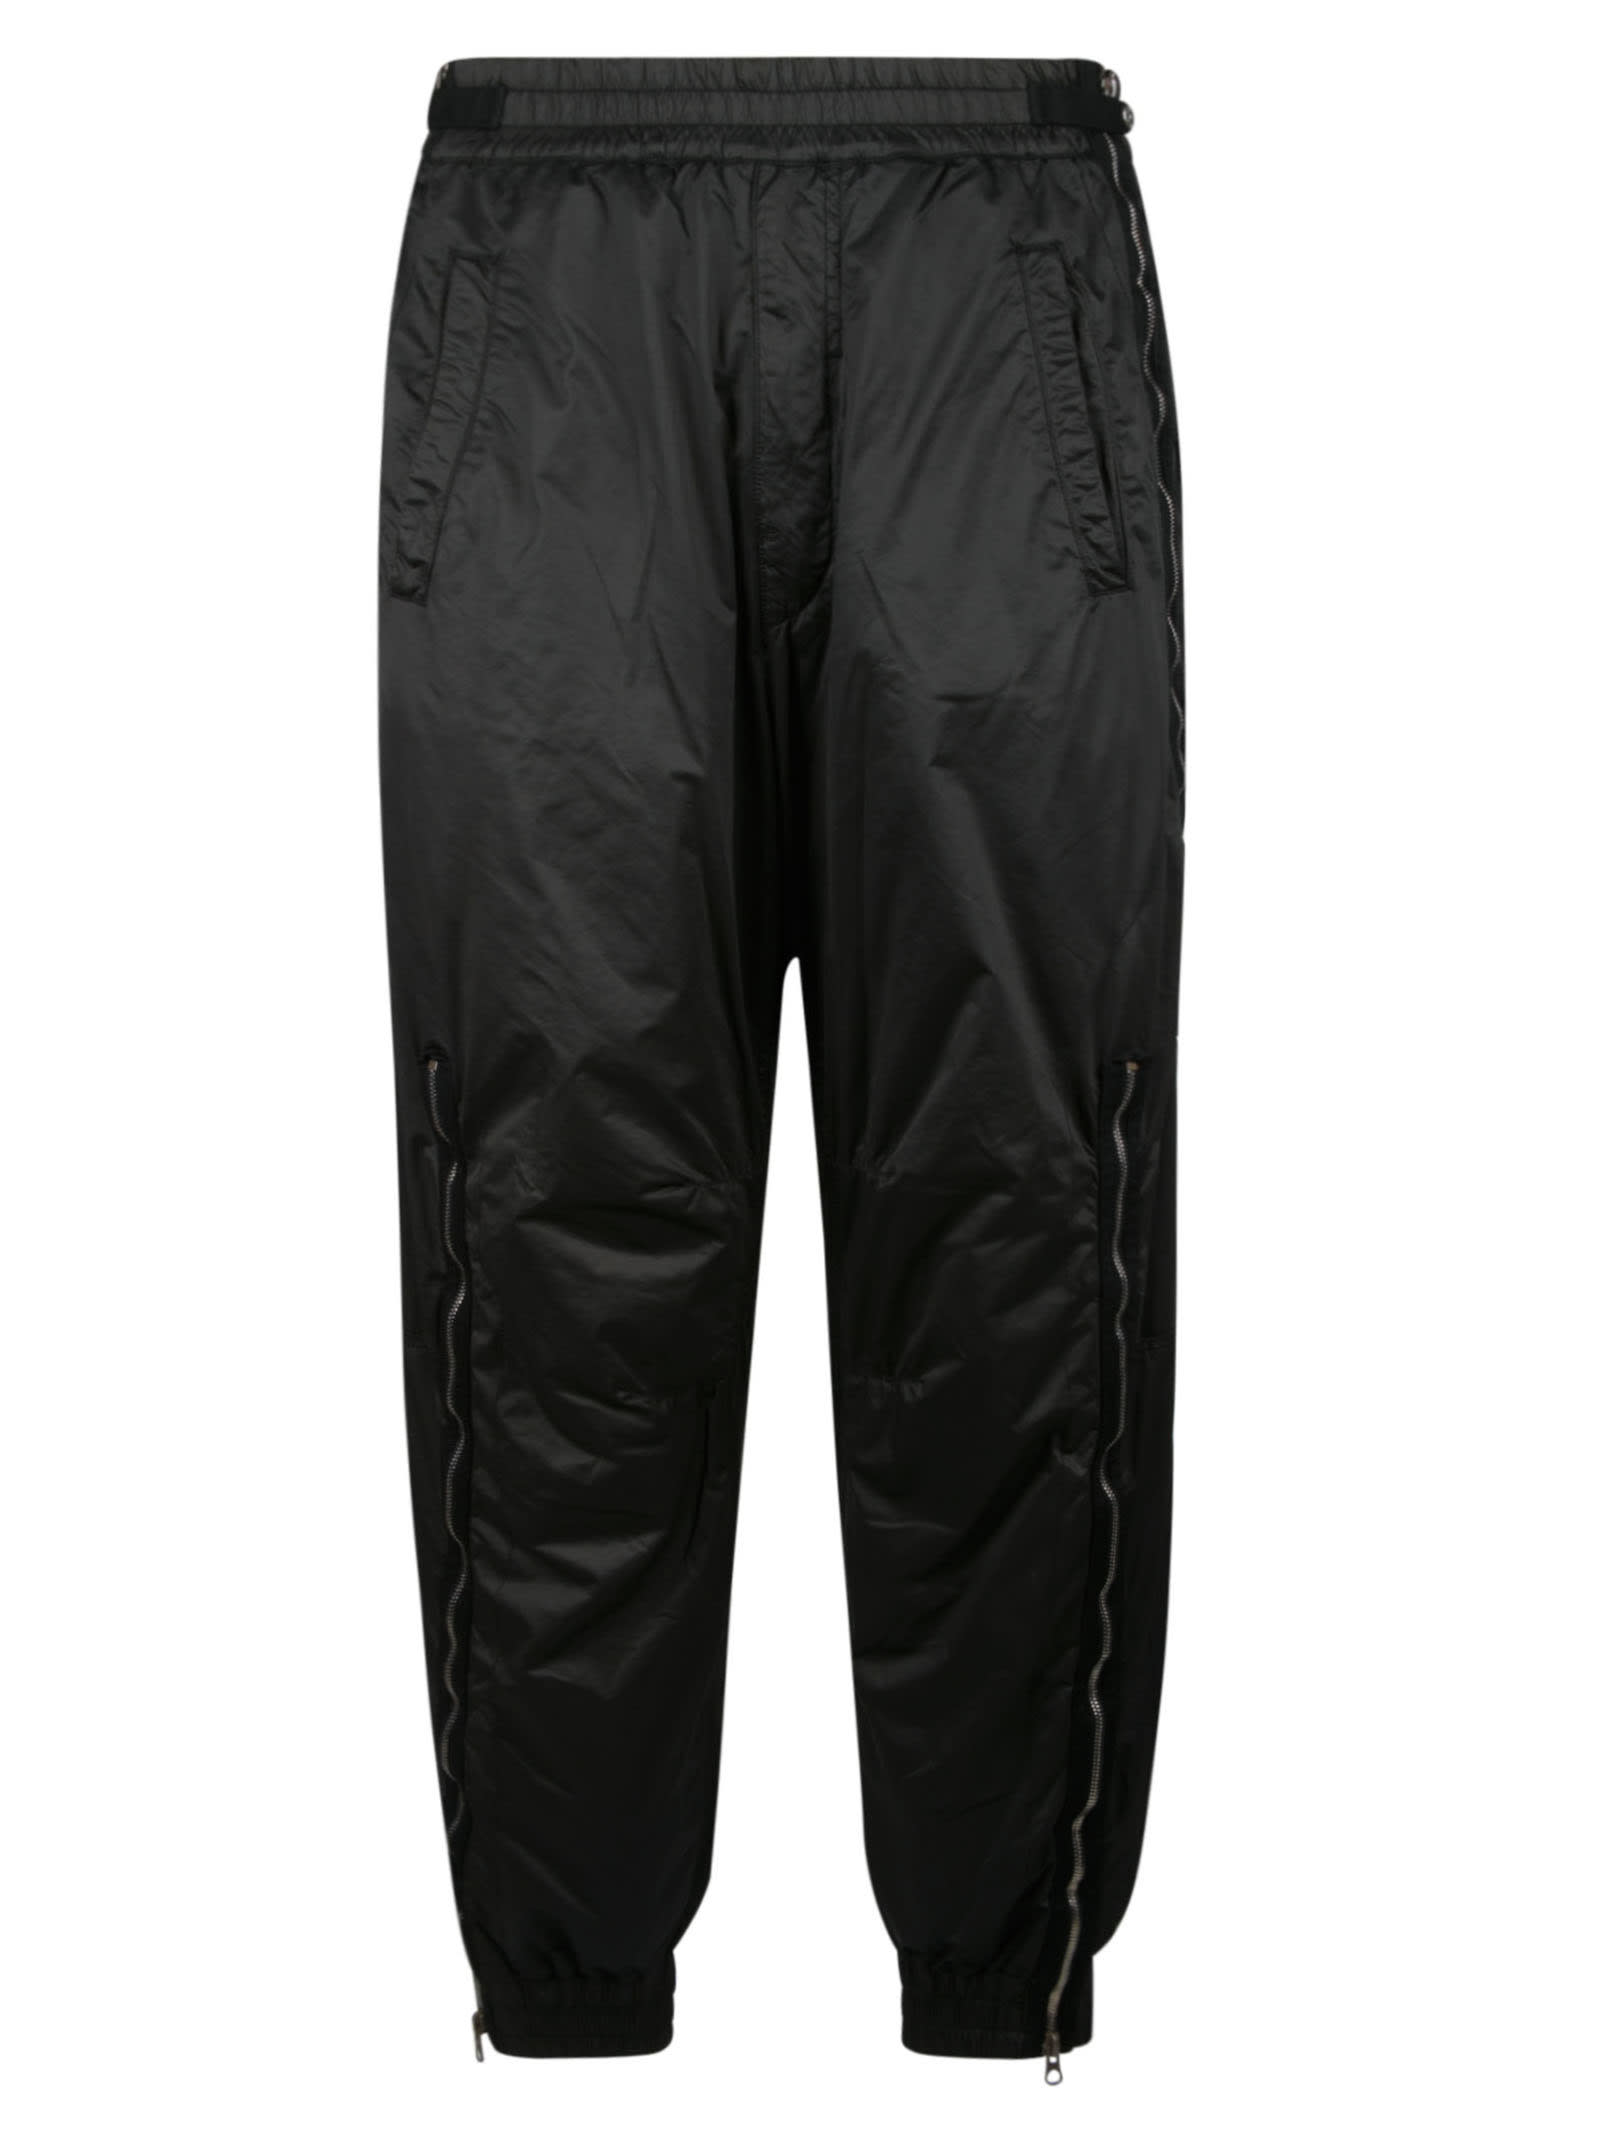 STONE ISLAND SHADOW PROJECT ELASTIC WAIST SIDE ZIPPED TRACK trousers